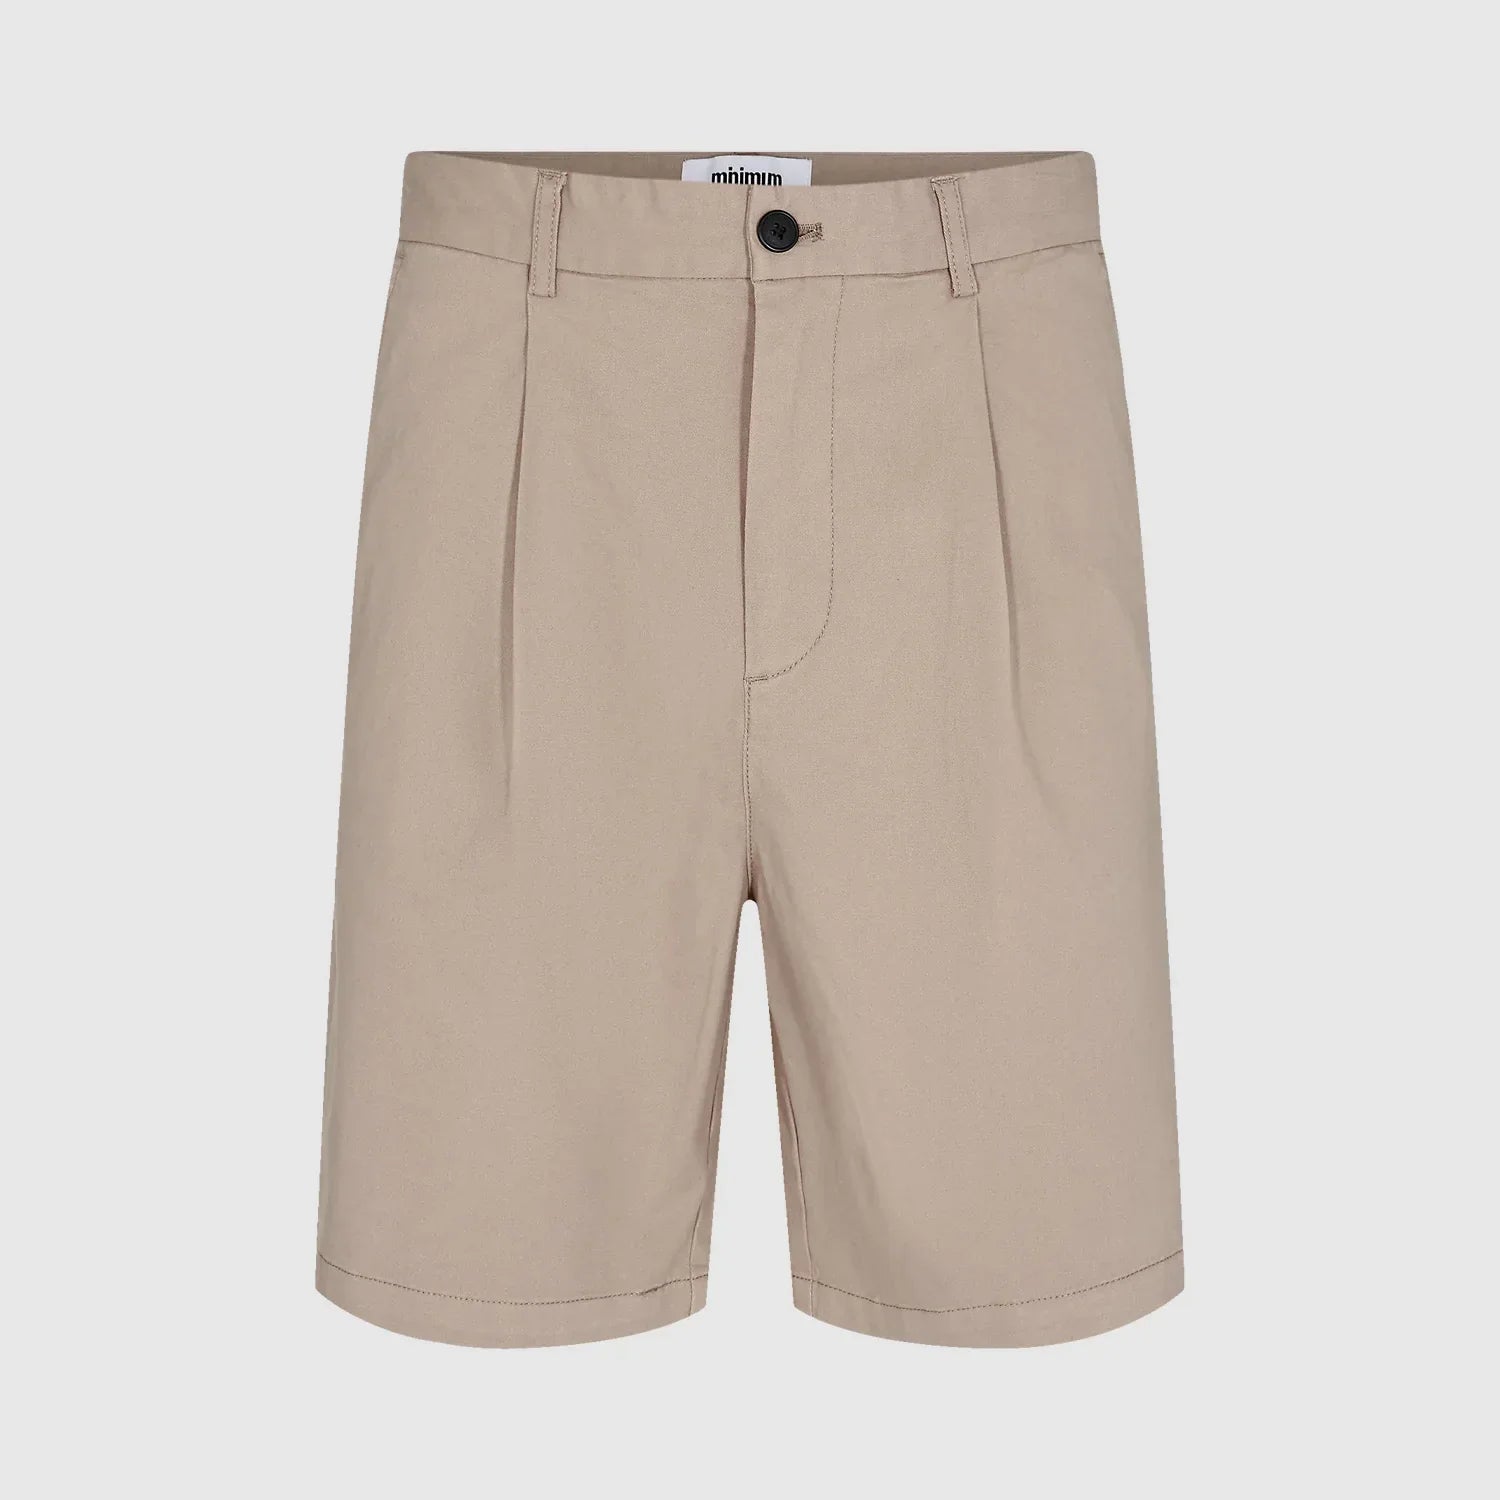 'MINIMUM Bratto 9344 Shorts' in 'Greige' colour